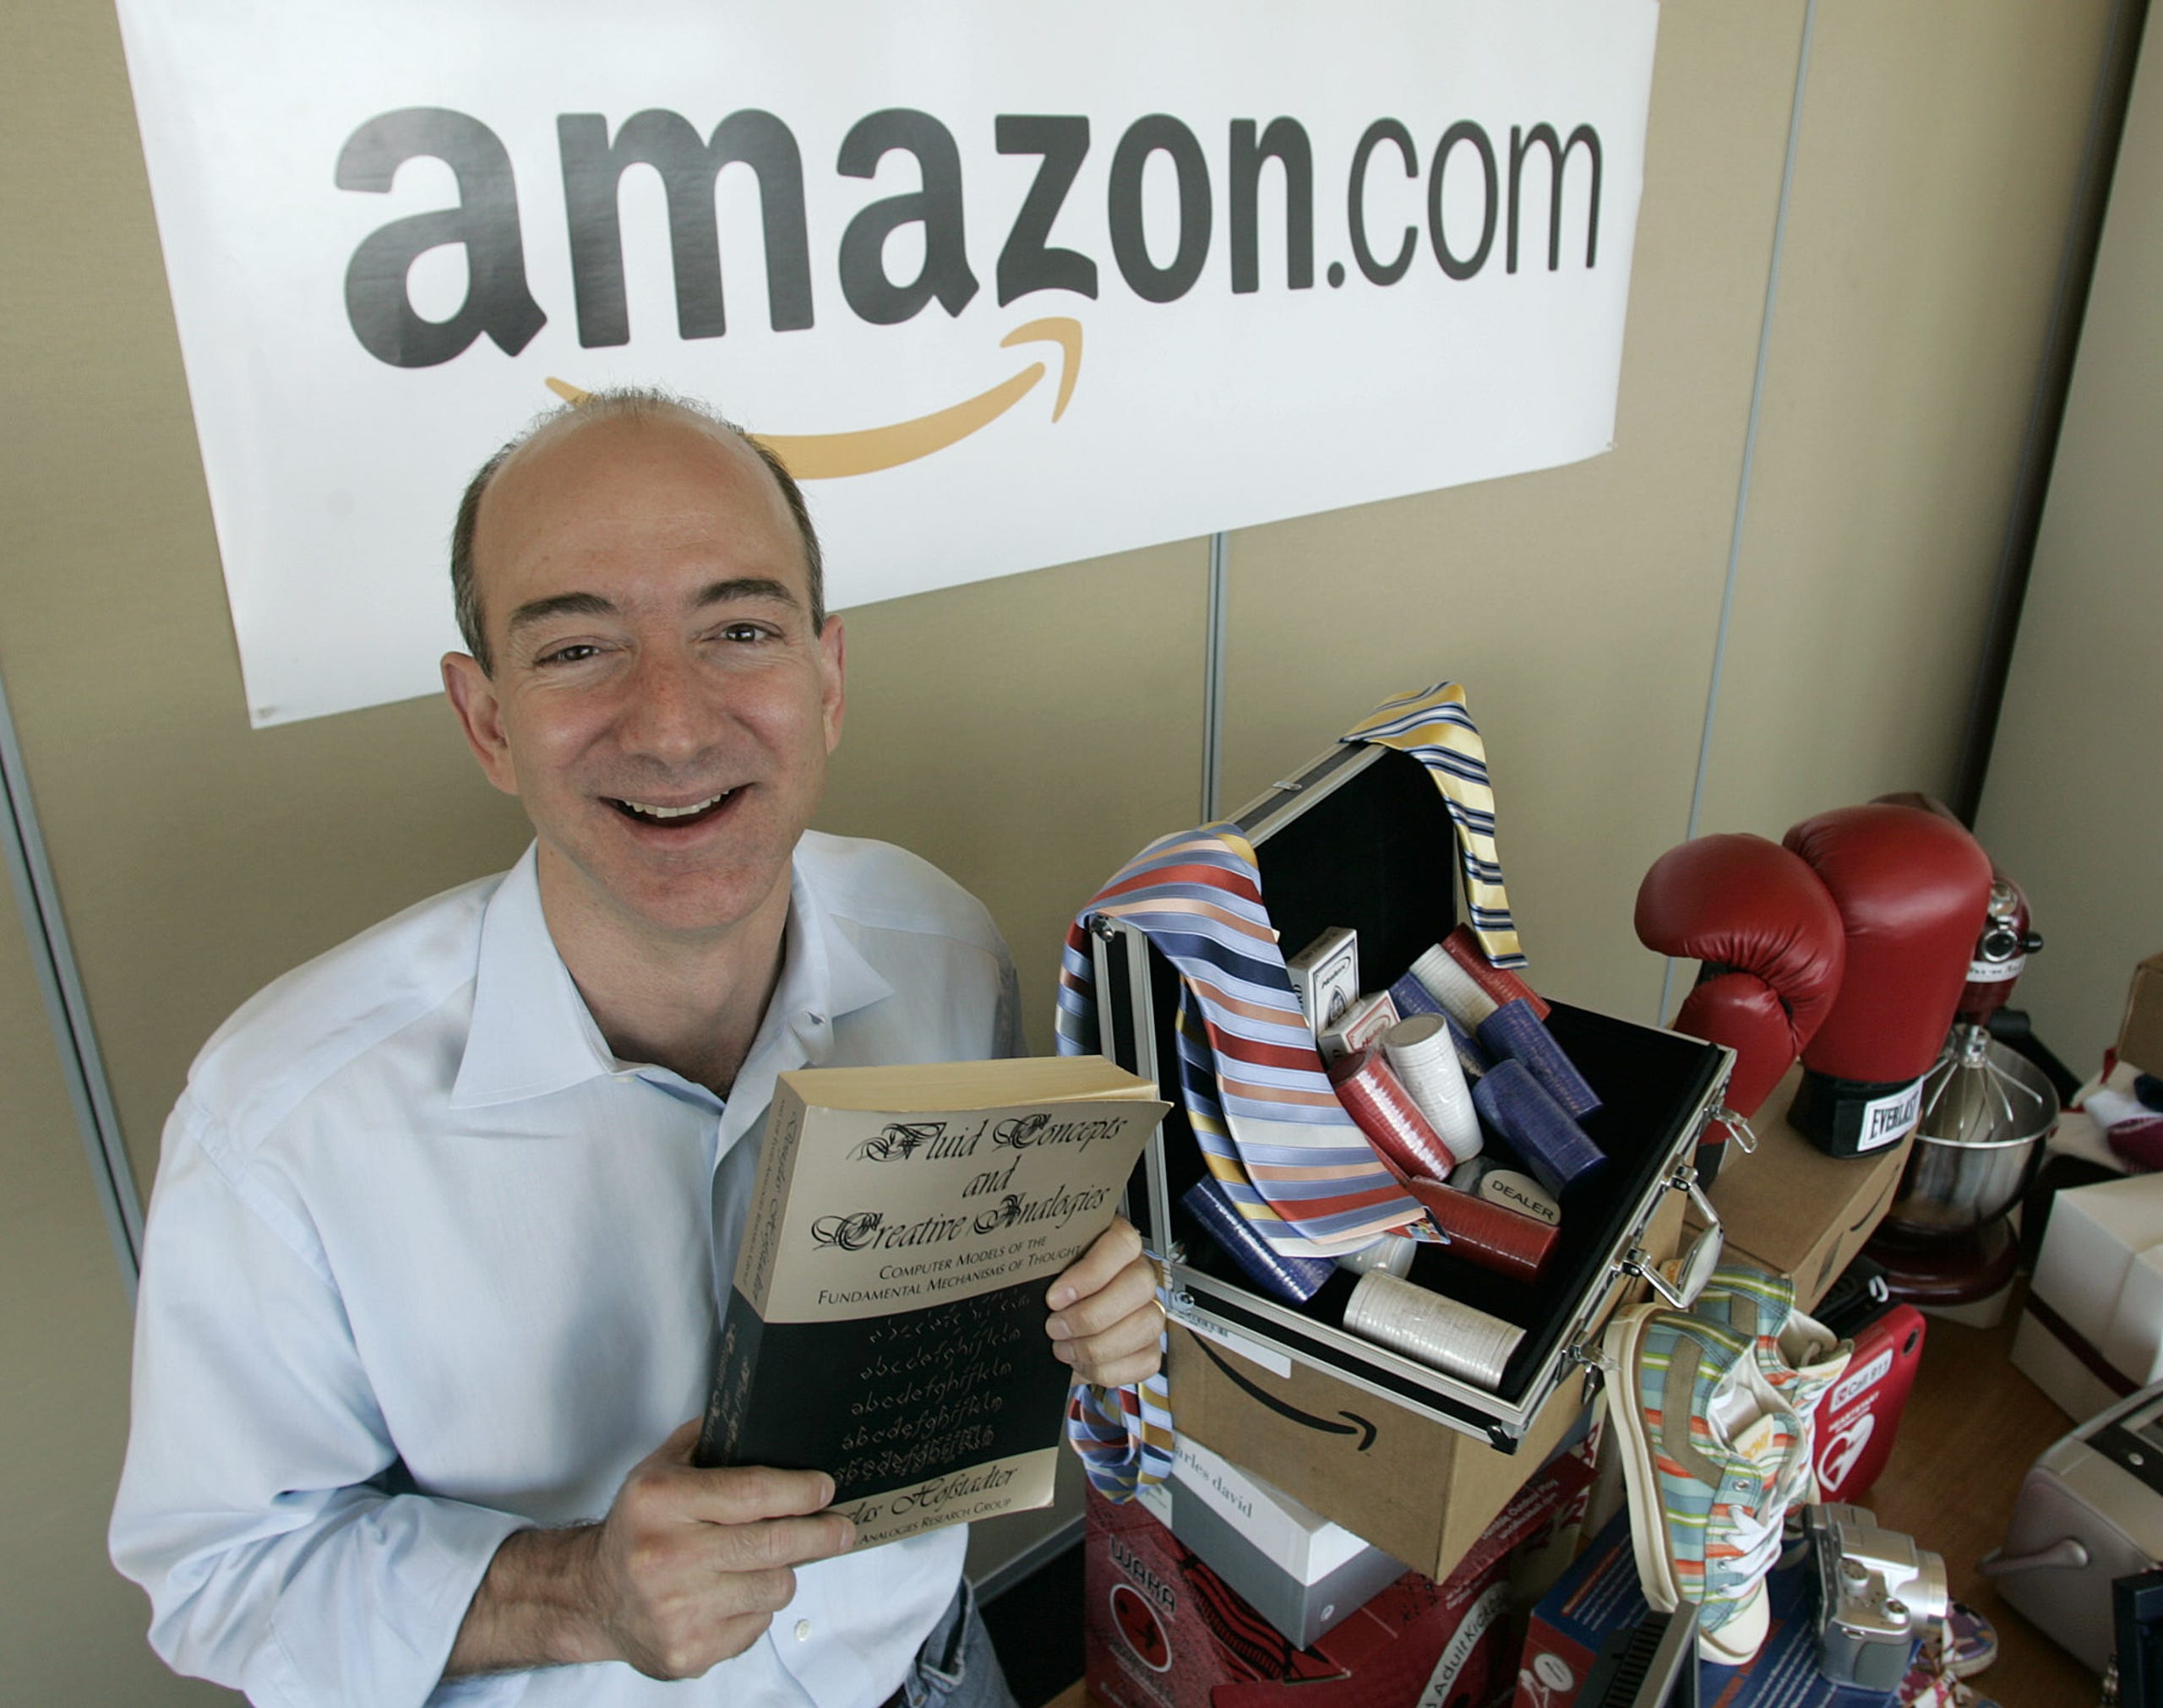 Jeff Bezos to step down as Amazon CEO today